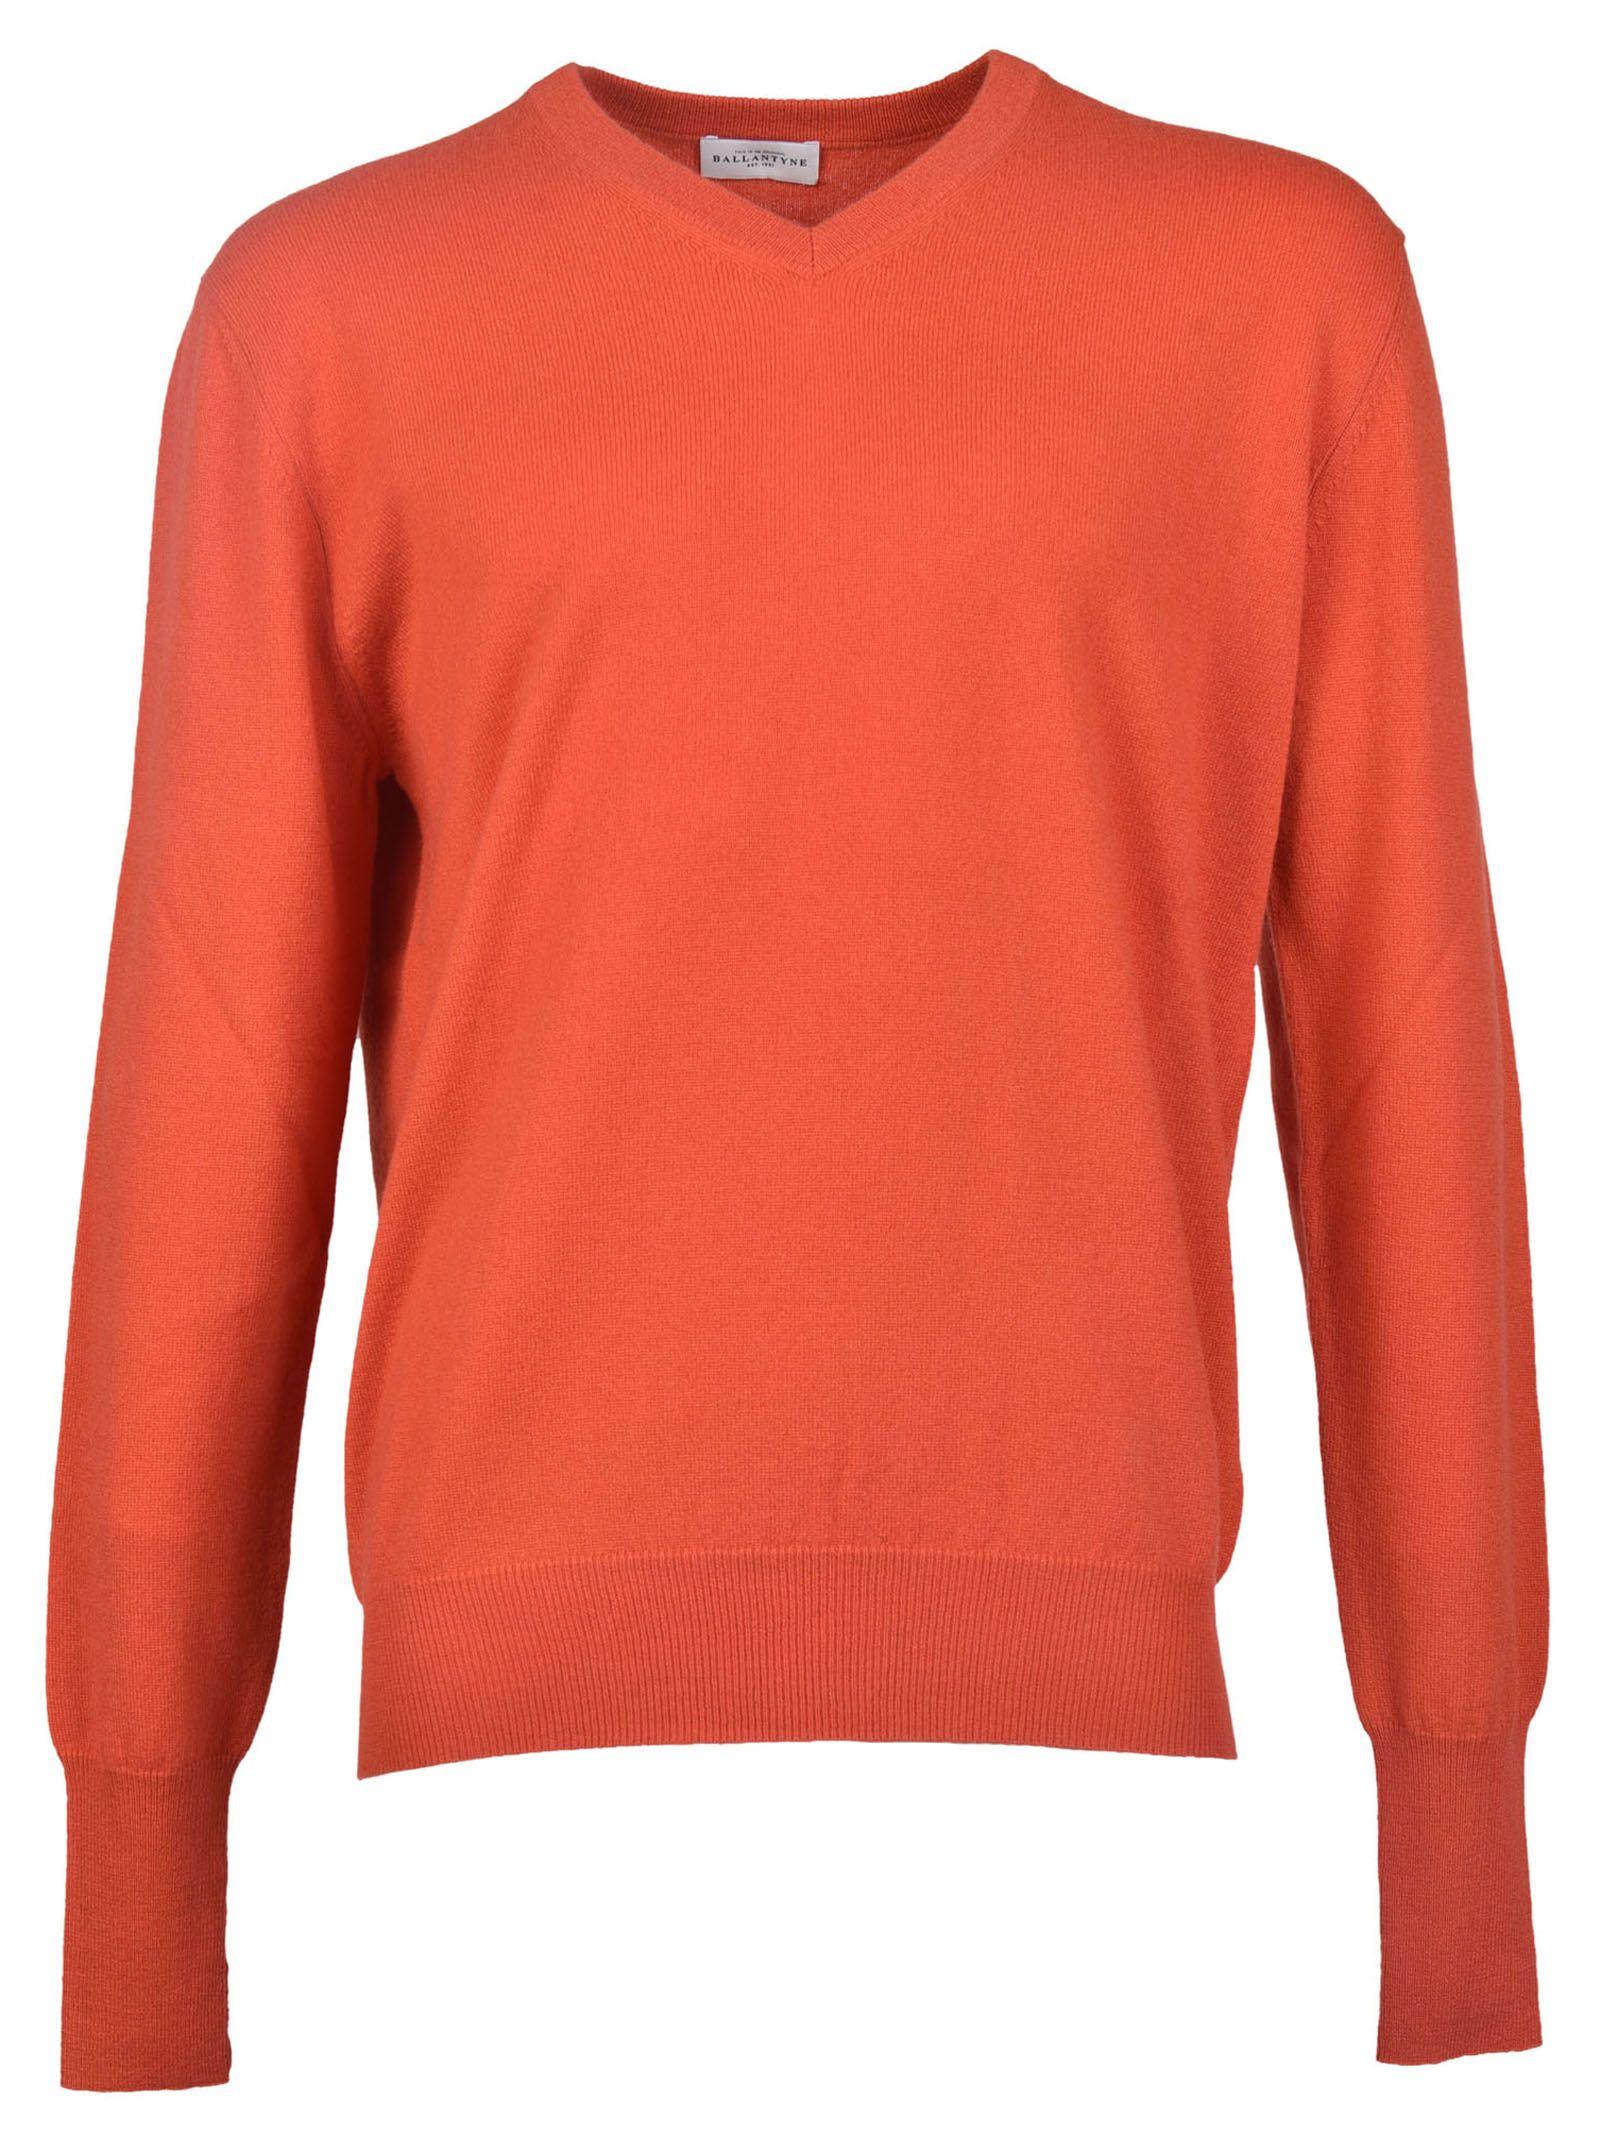 Ballantyne - Ballantyne Cashmere Sweater - Orange, Men's Sweaters | Italist